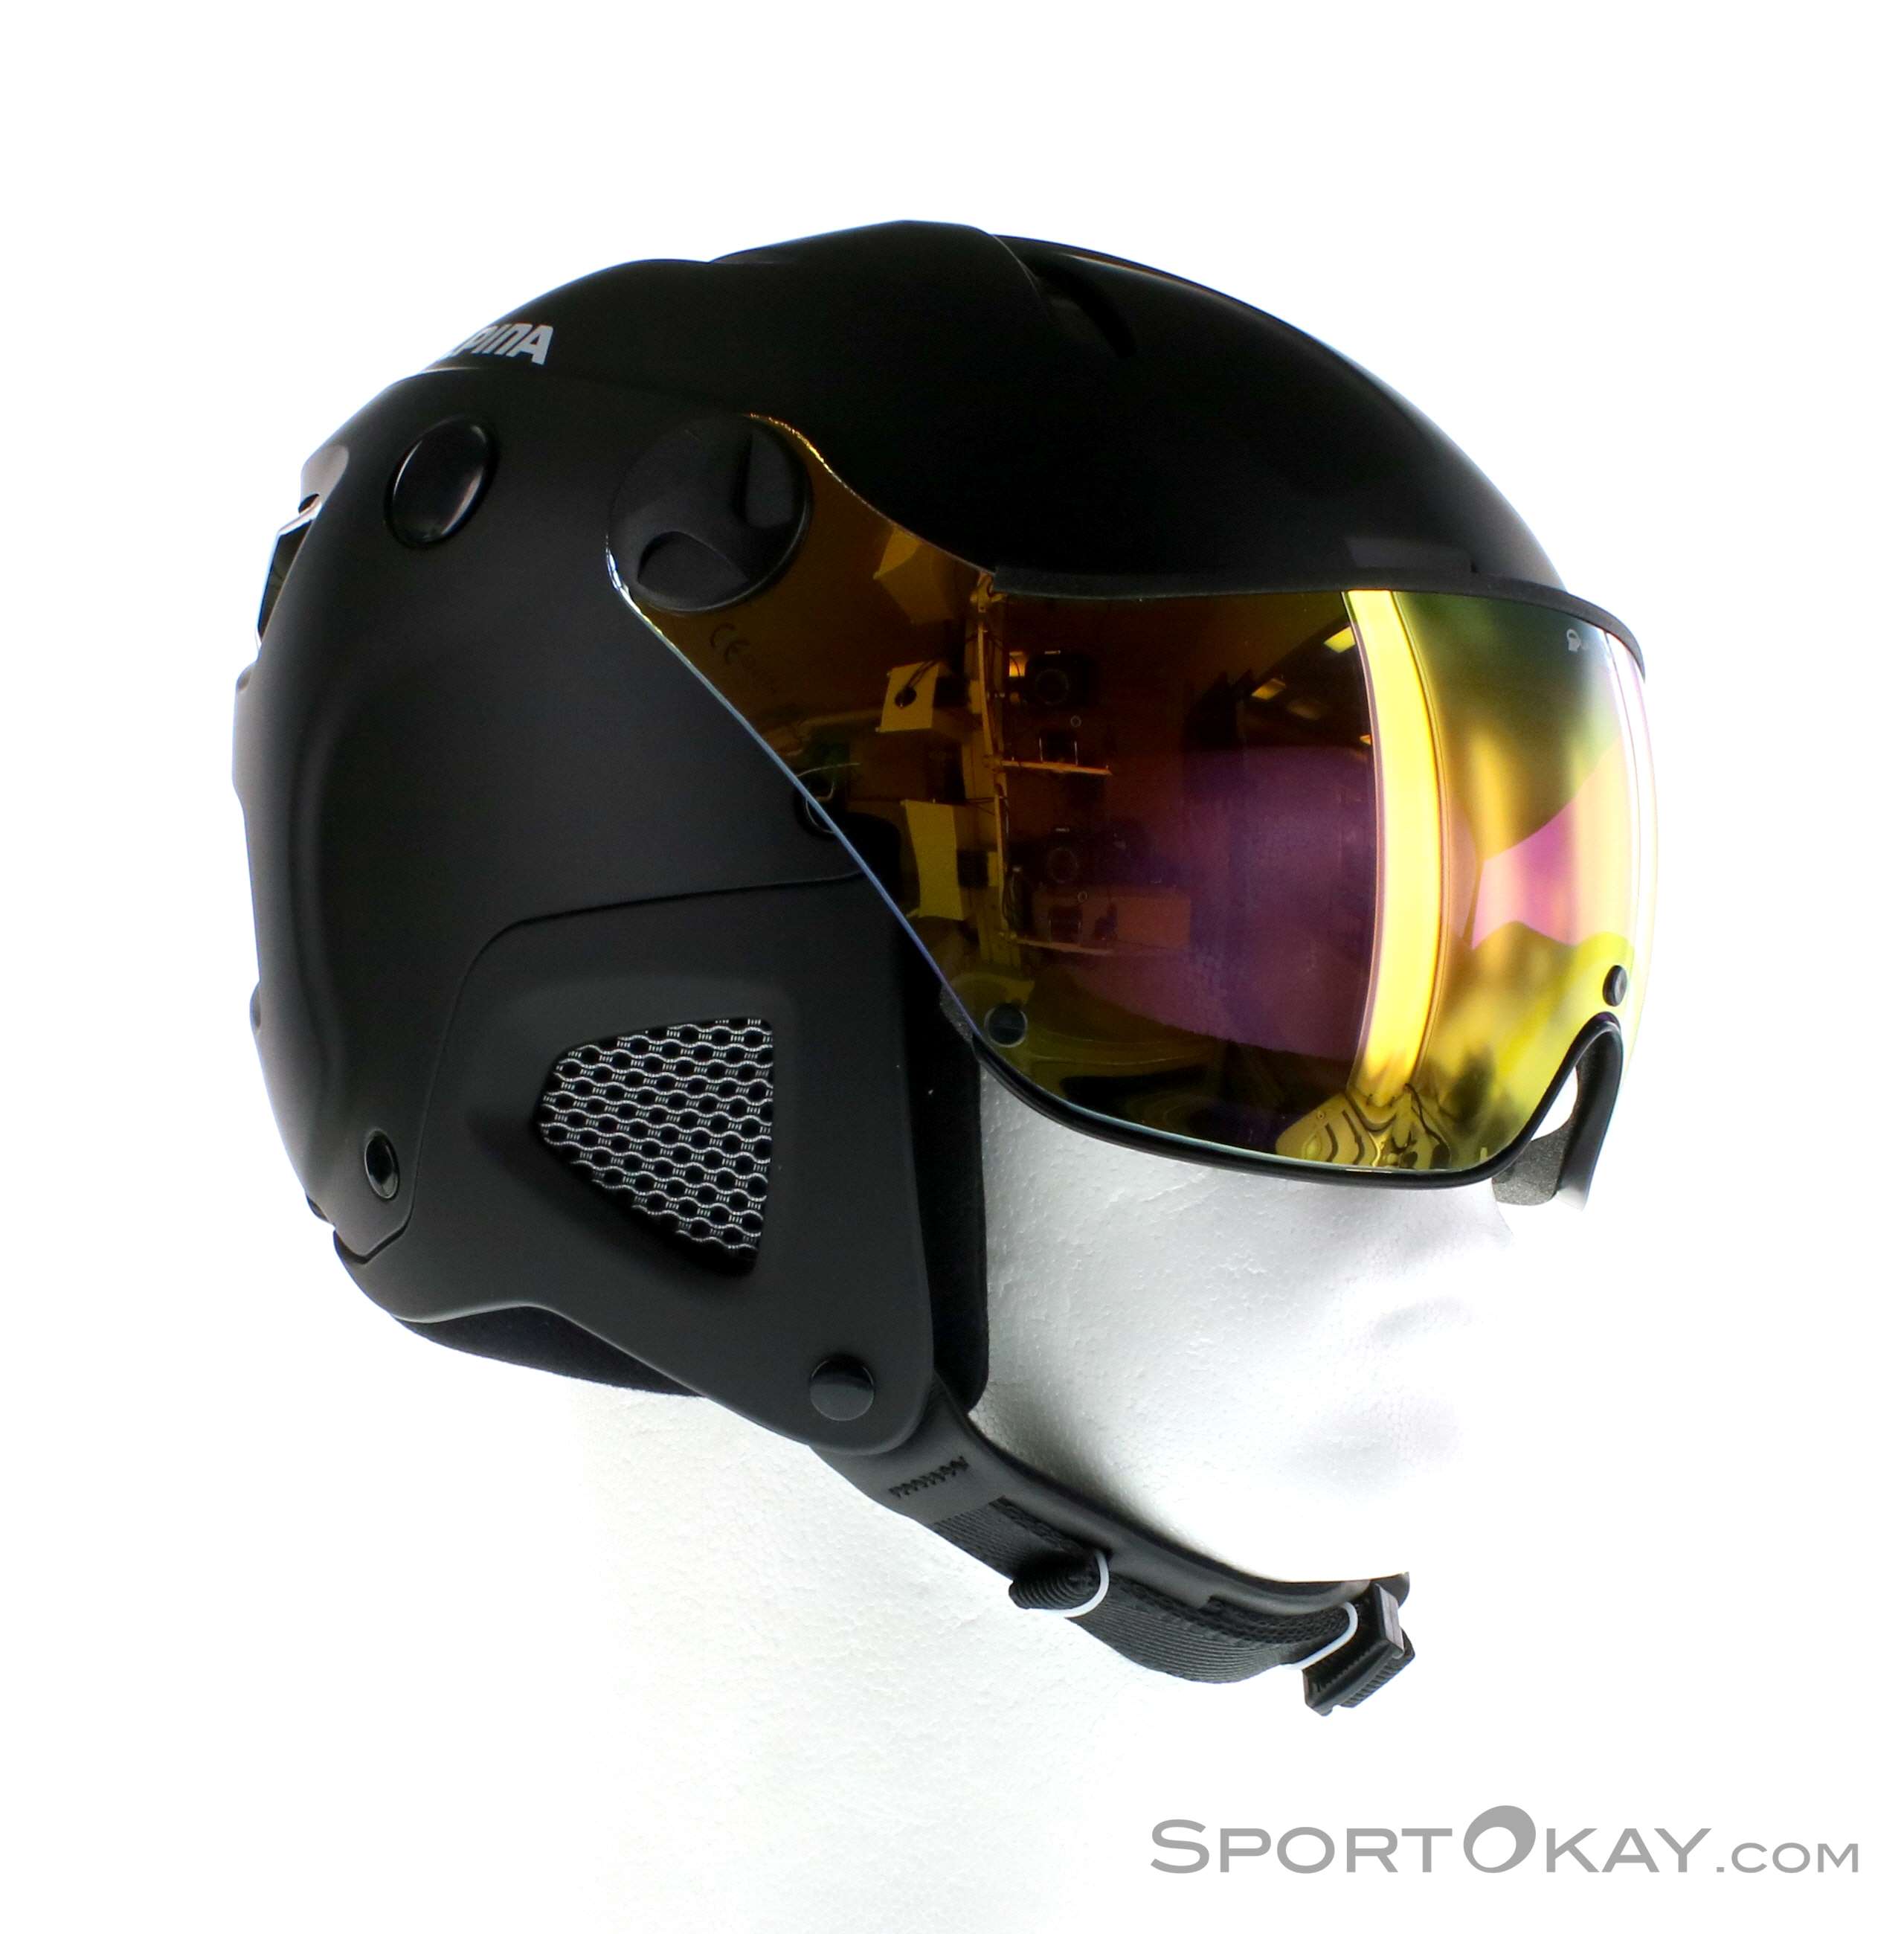 Kort geleden Noordoosten Uitleg Alpina Attelas Visor QVM Ski Helmet - Ski Helmets - Ski Helmets & Accessory  - Ski & Freeride - All